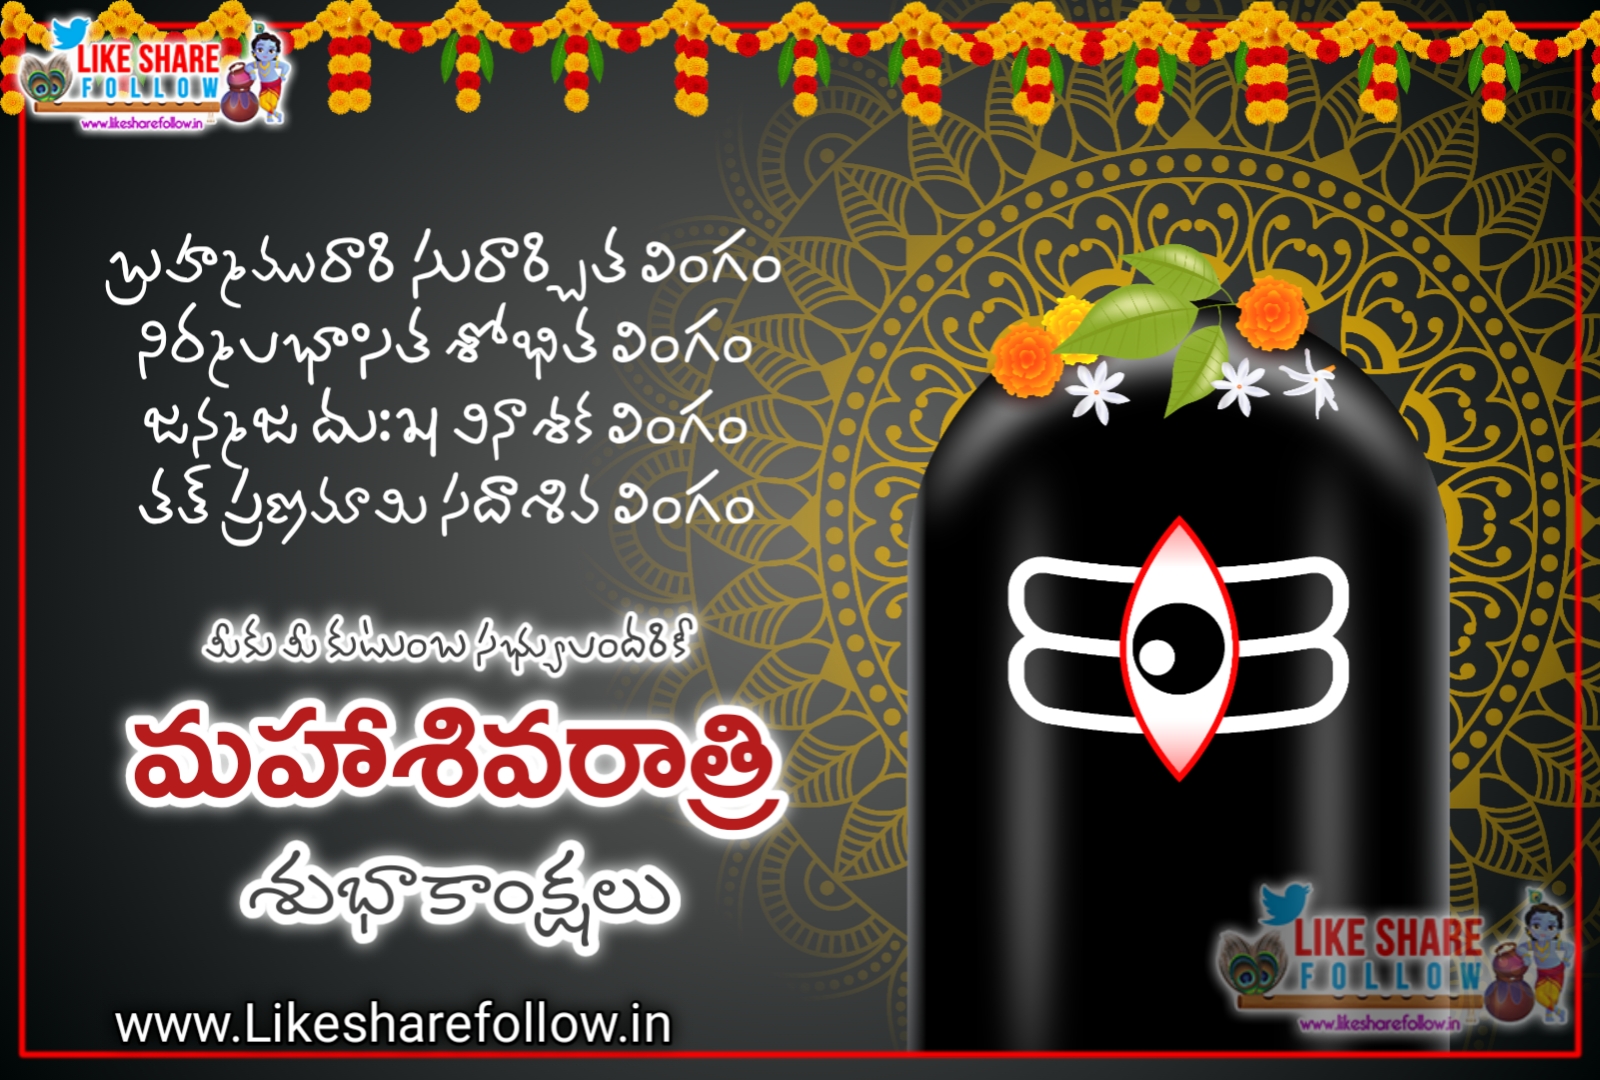 Maha Shivaratri Telugu Quotes and Wishes hd images | Like Share Follow